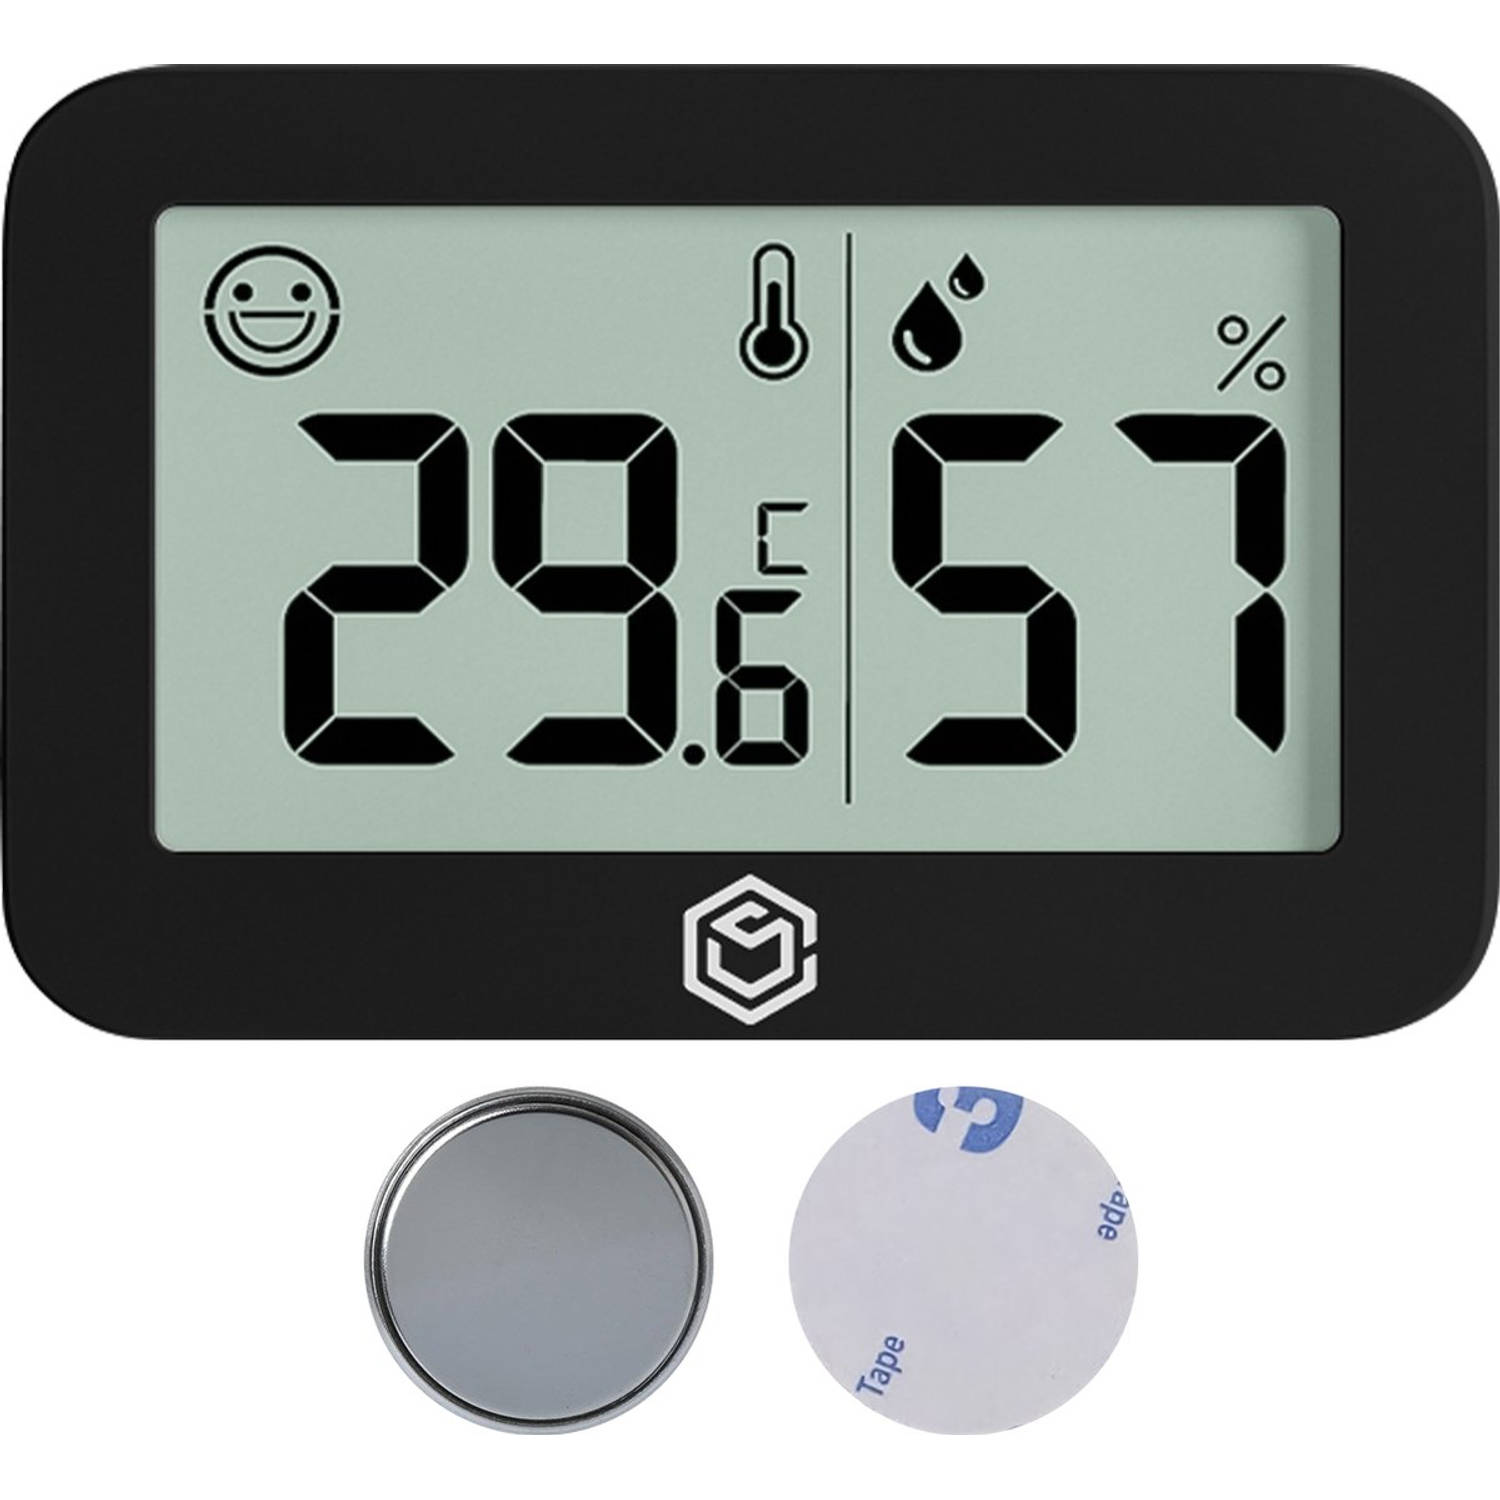 Ease Electronicz Hygrometer & Thermometer - Weerstation - Luchtvochtigheidsmeter - Thermometer Voor Binnen - Incl. Batterij en Plakstrip - Zwart